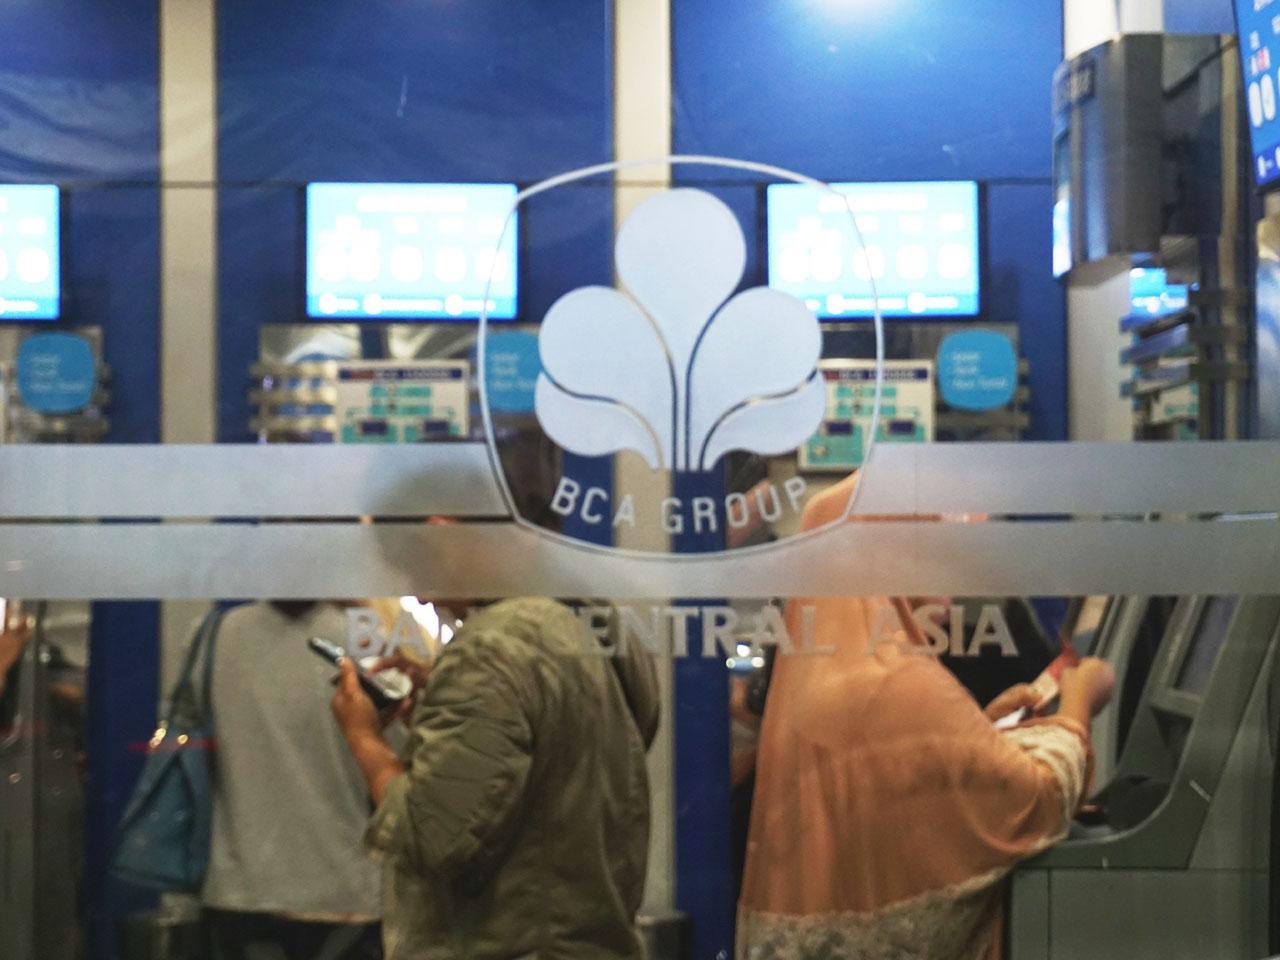 Mesin ATM  Pertama di  Indonesia  Historia